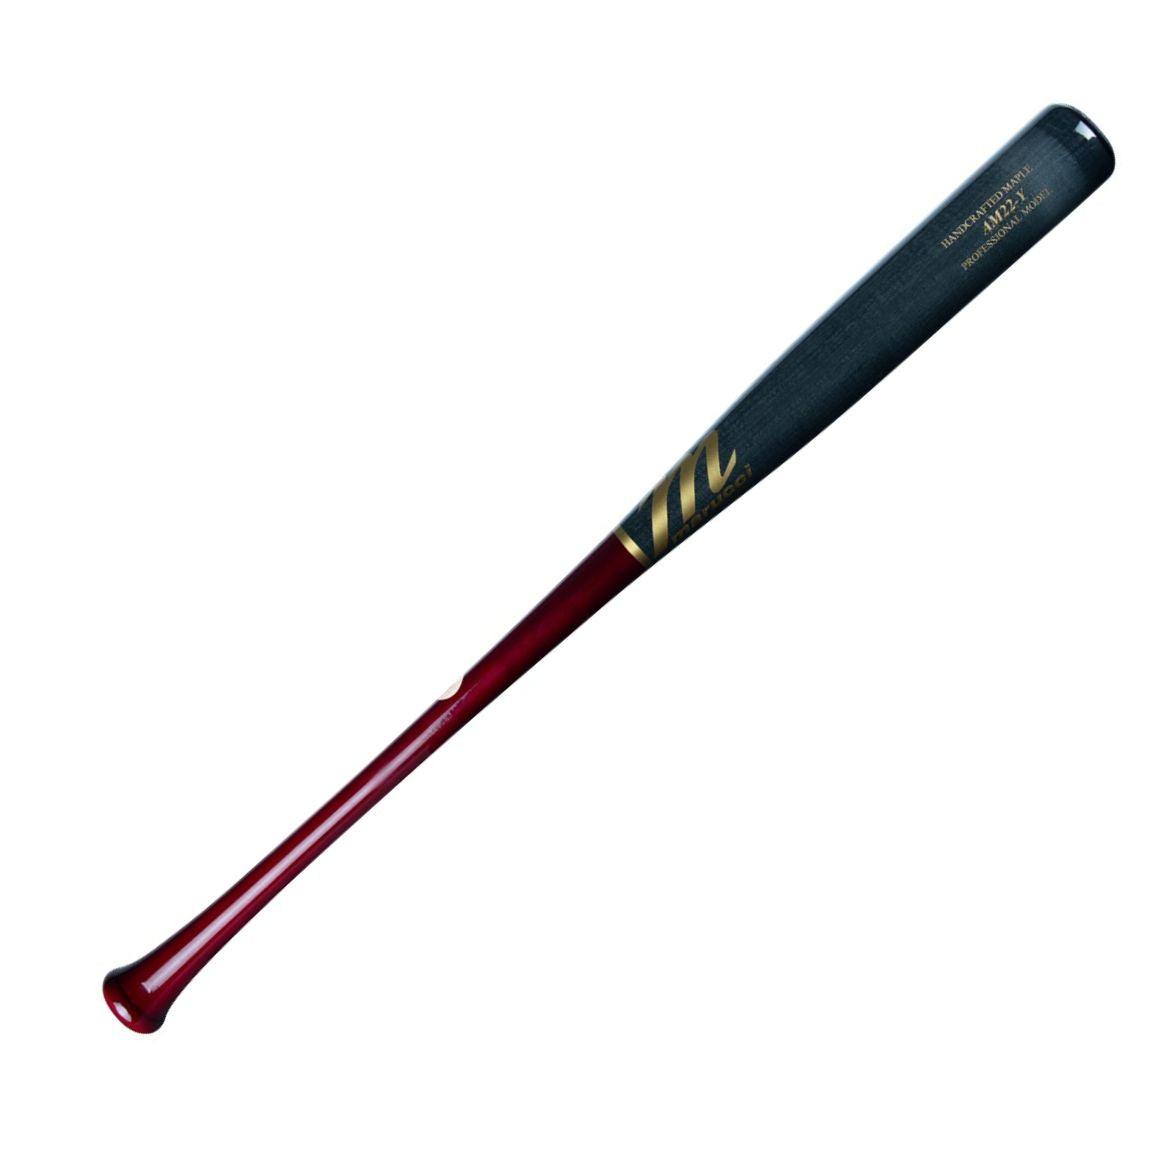 Marucci AM22 Pro Model Youth Maple Baseball Bat